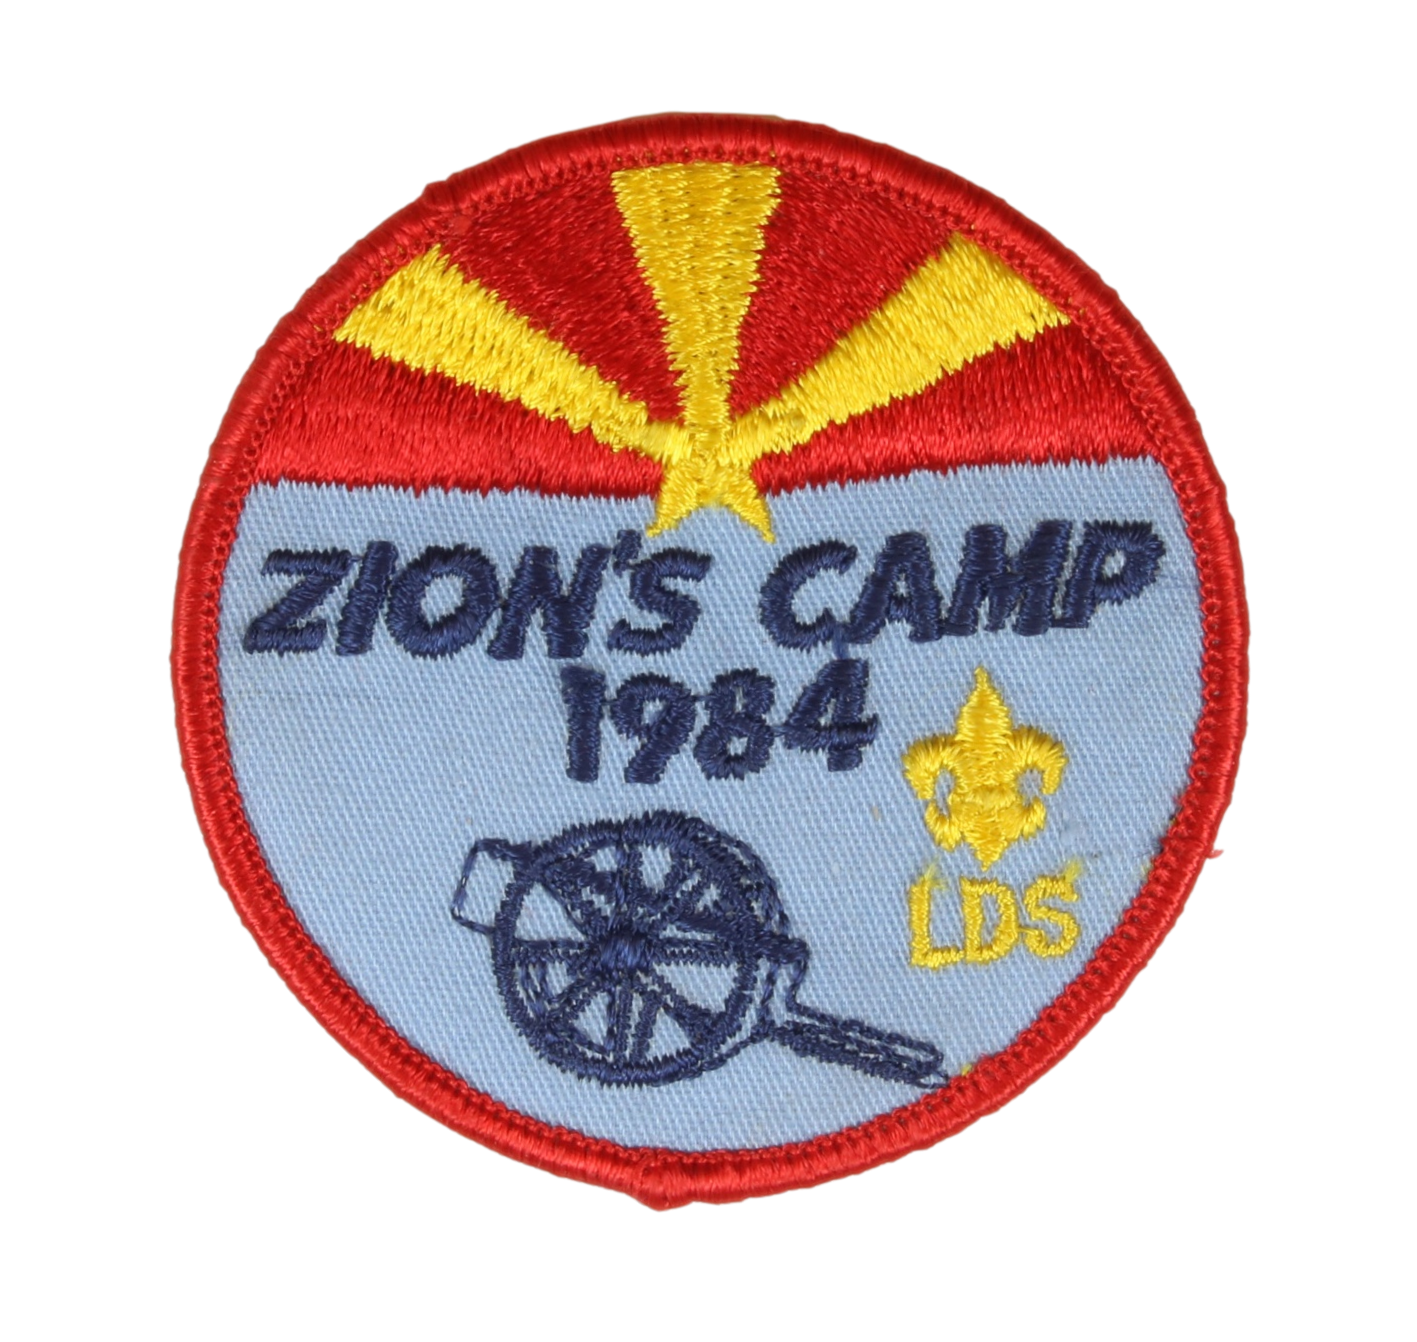 1984 Zions Camp LDS Patch